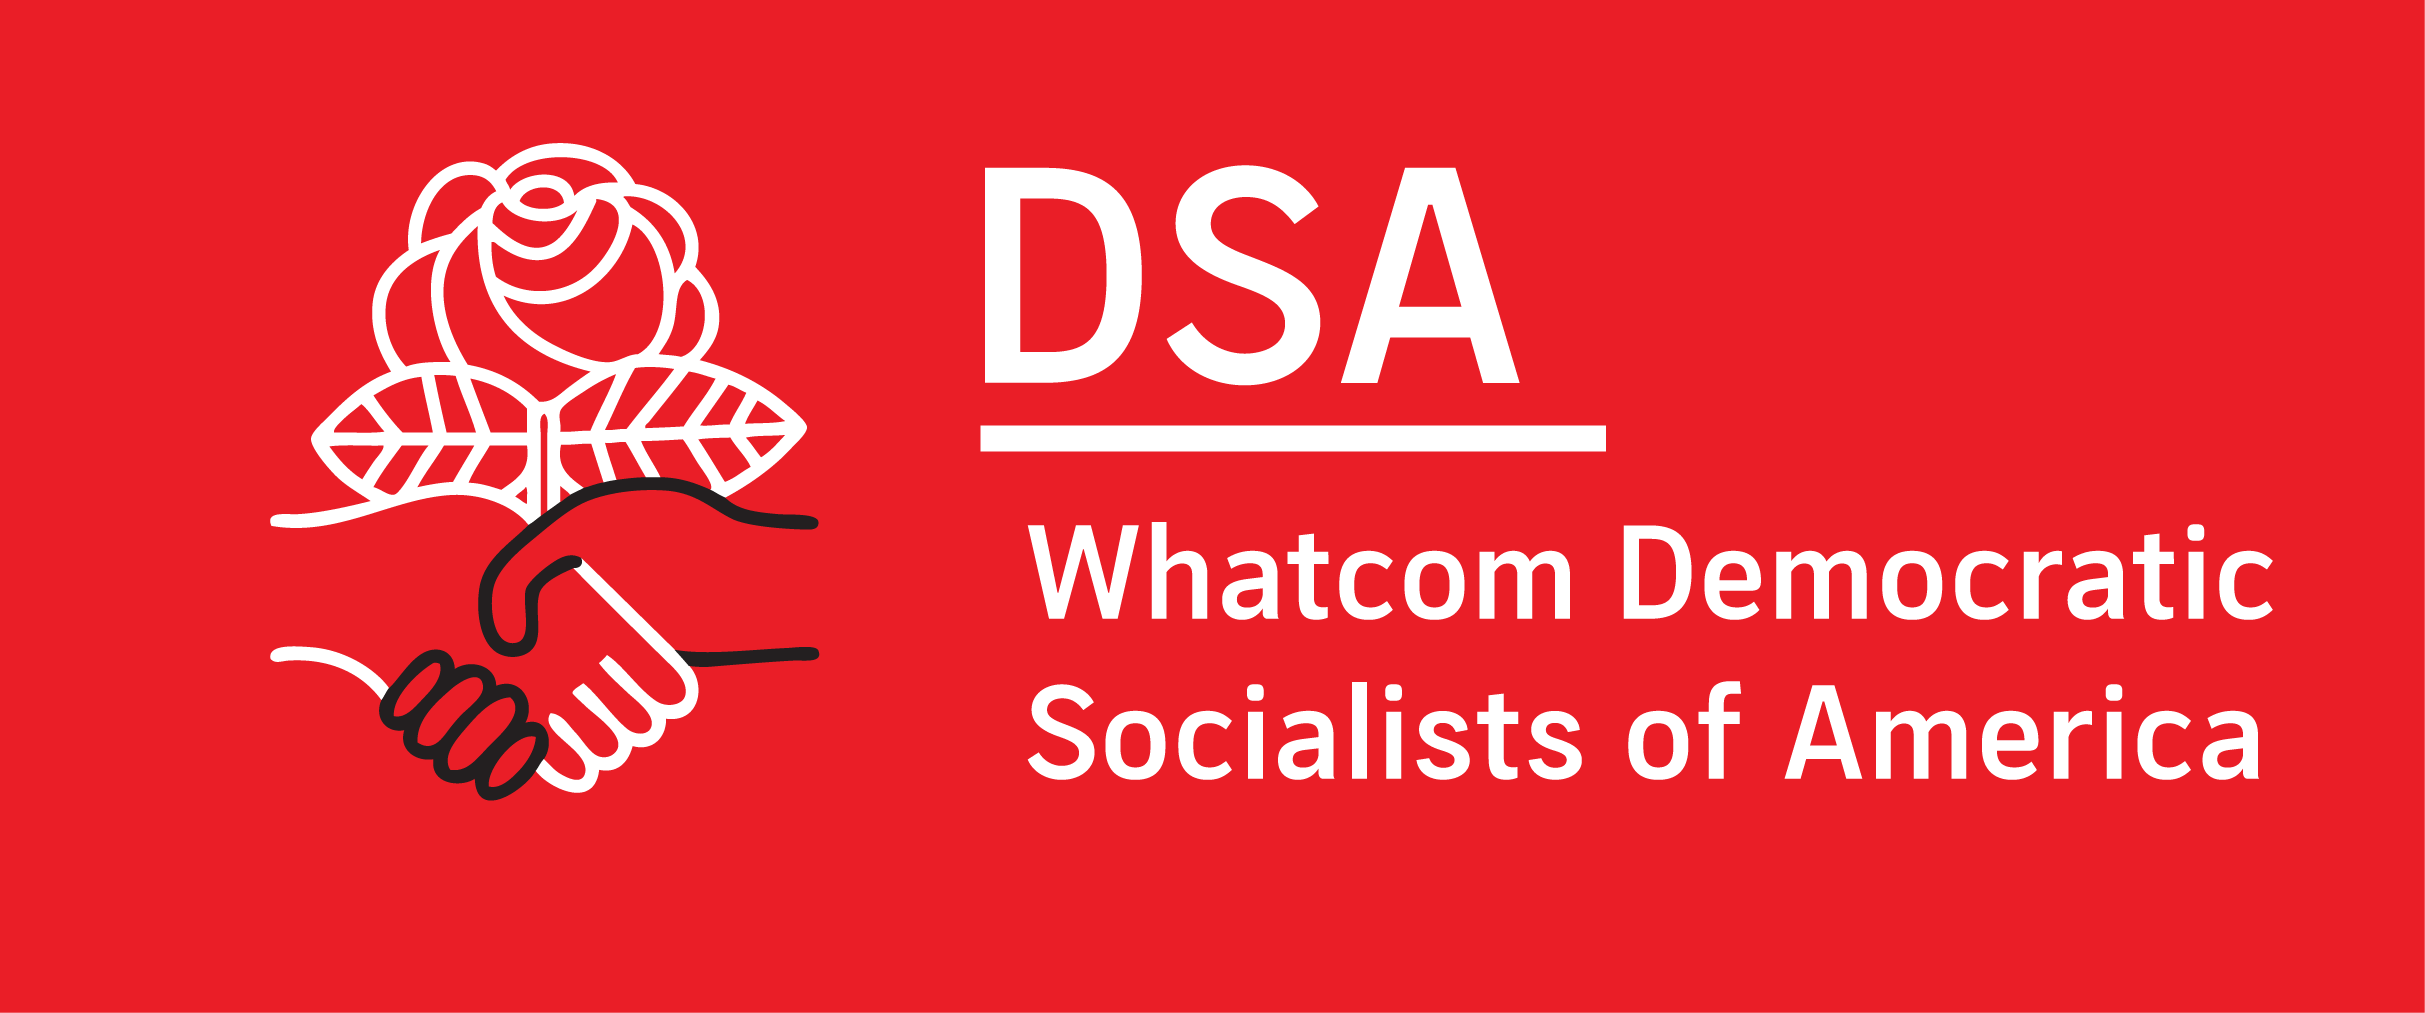 Whatcom County (WA) DSA logo